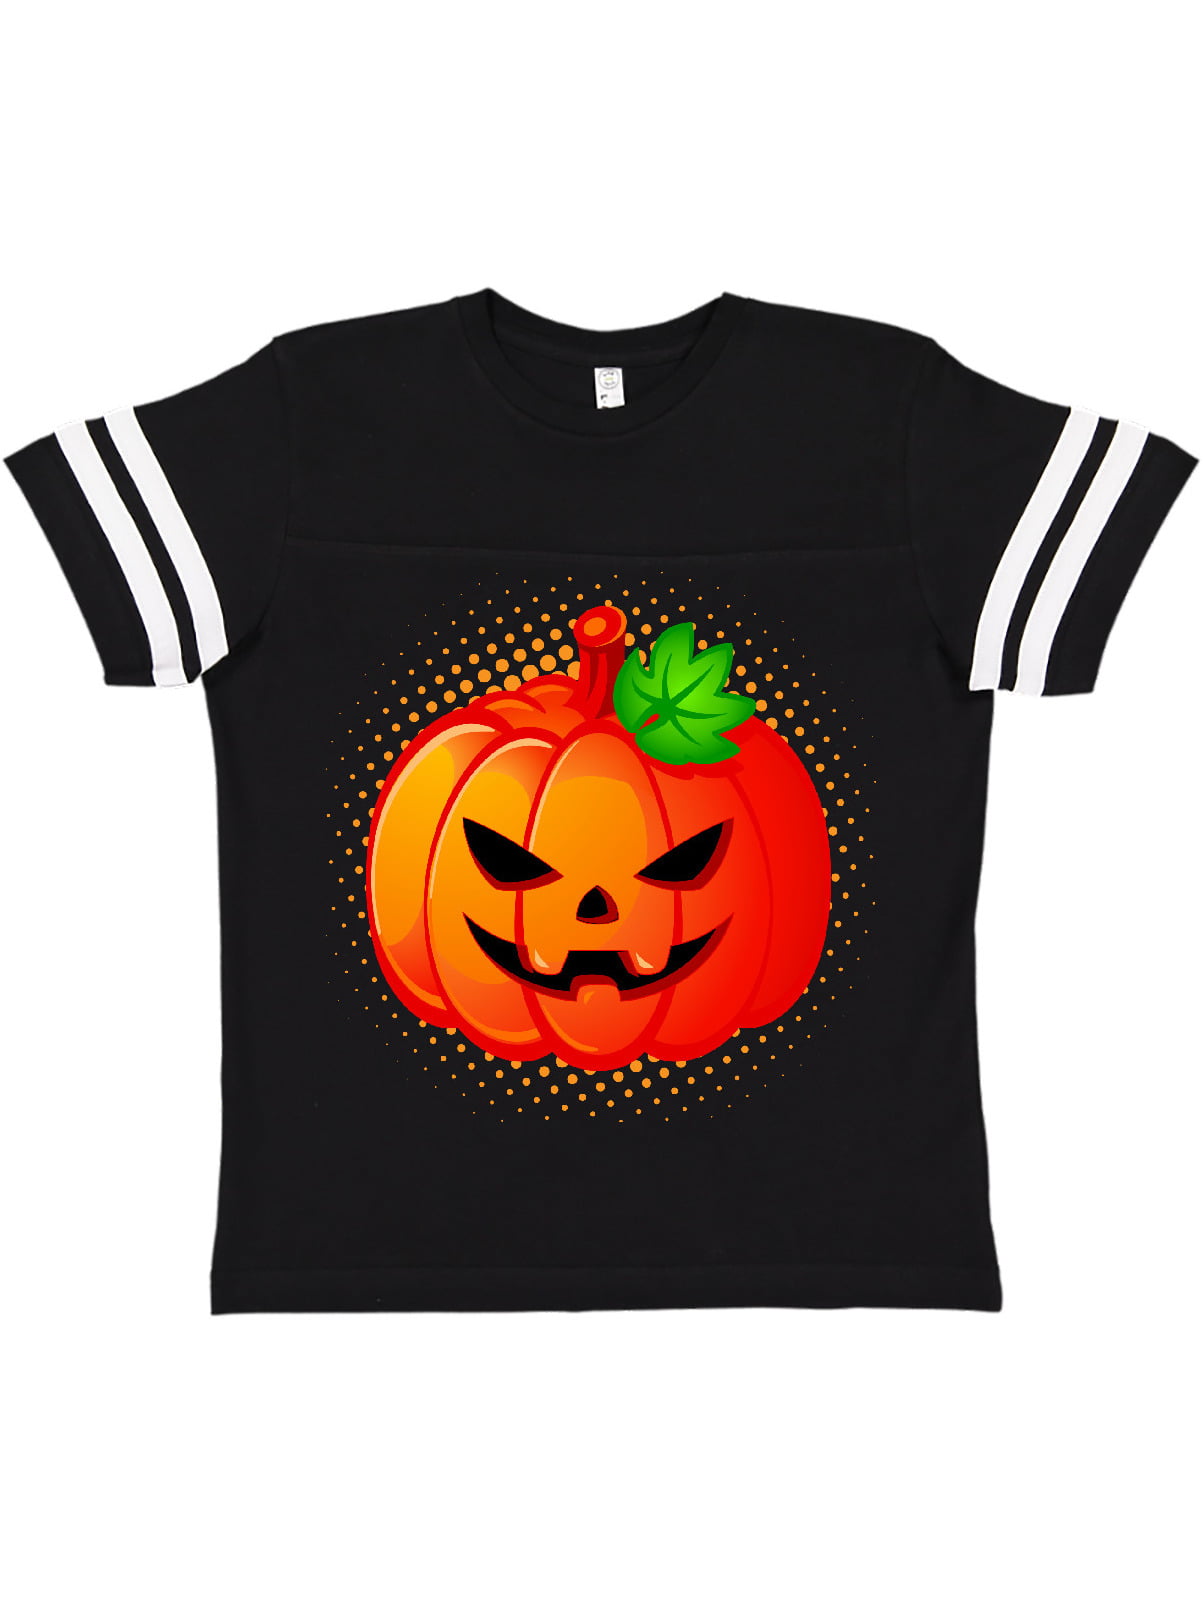 New Carter's Orange Pumpkin Jack O Lant Halloween Top NWT 2T 3T 4T 5T 6 7 8 Kid 